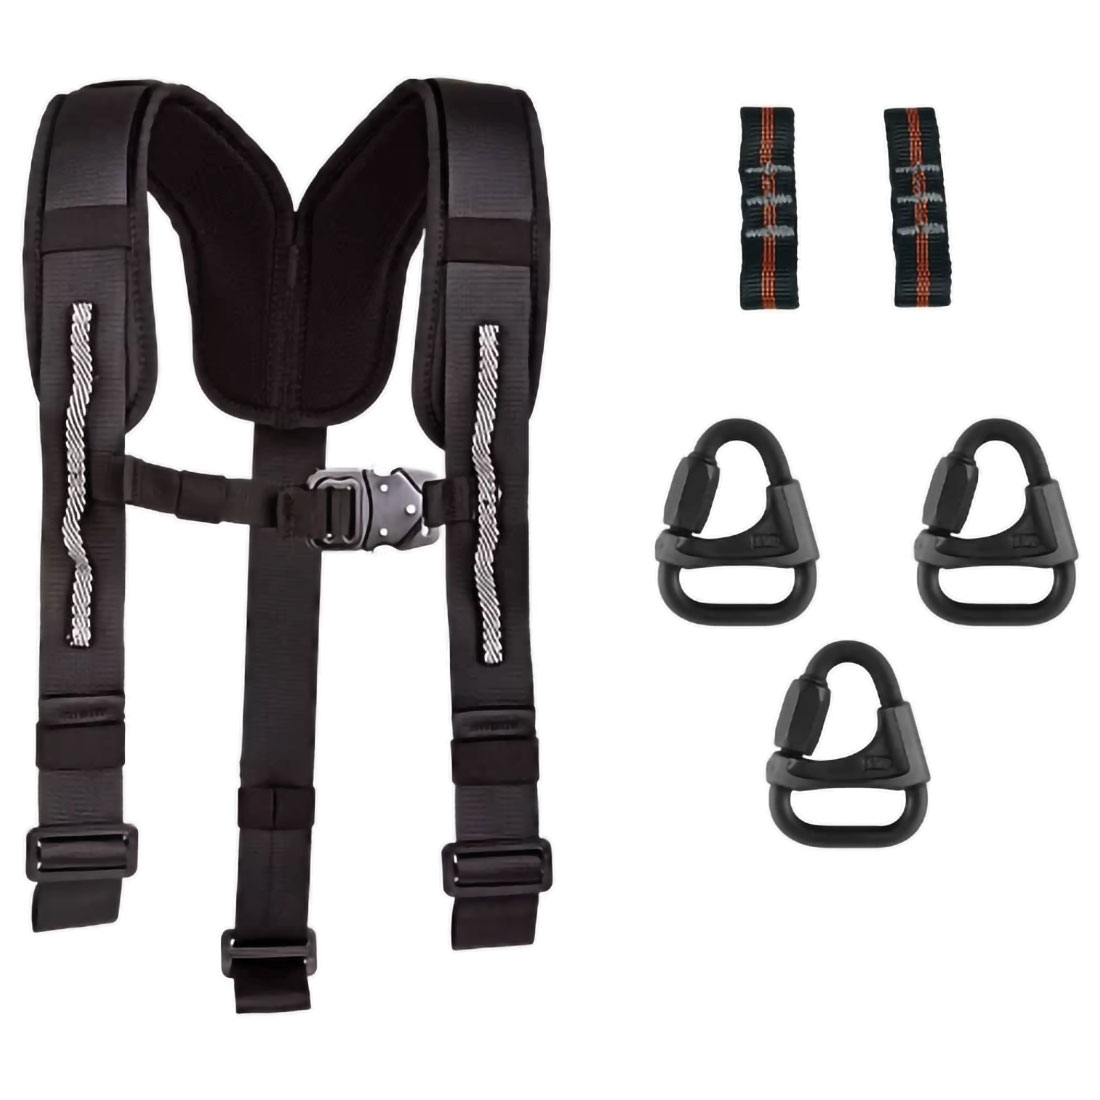 treeAustria pro shoulder strap kit